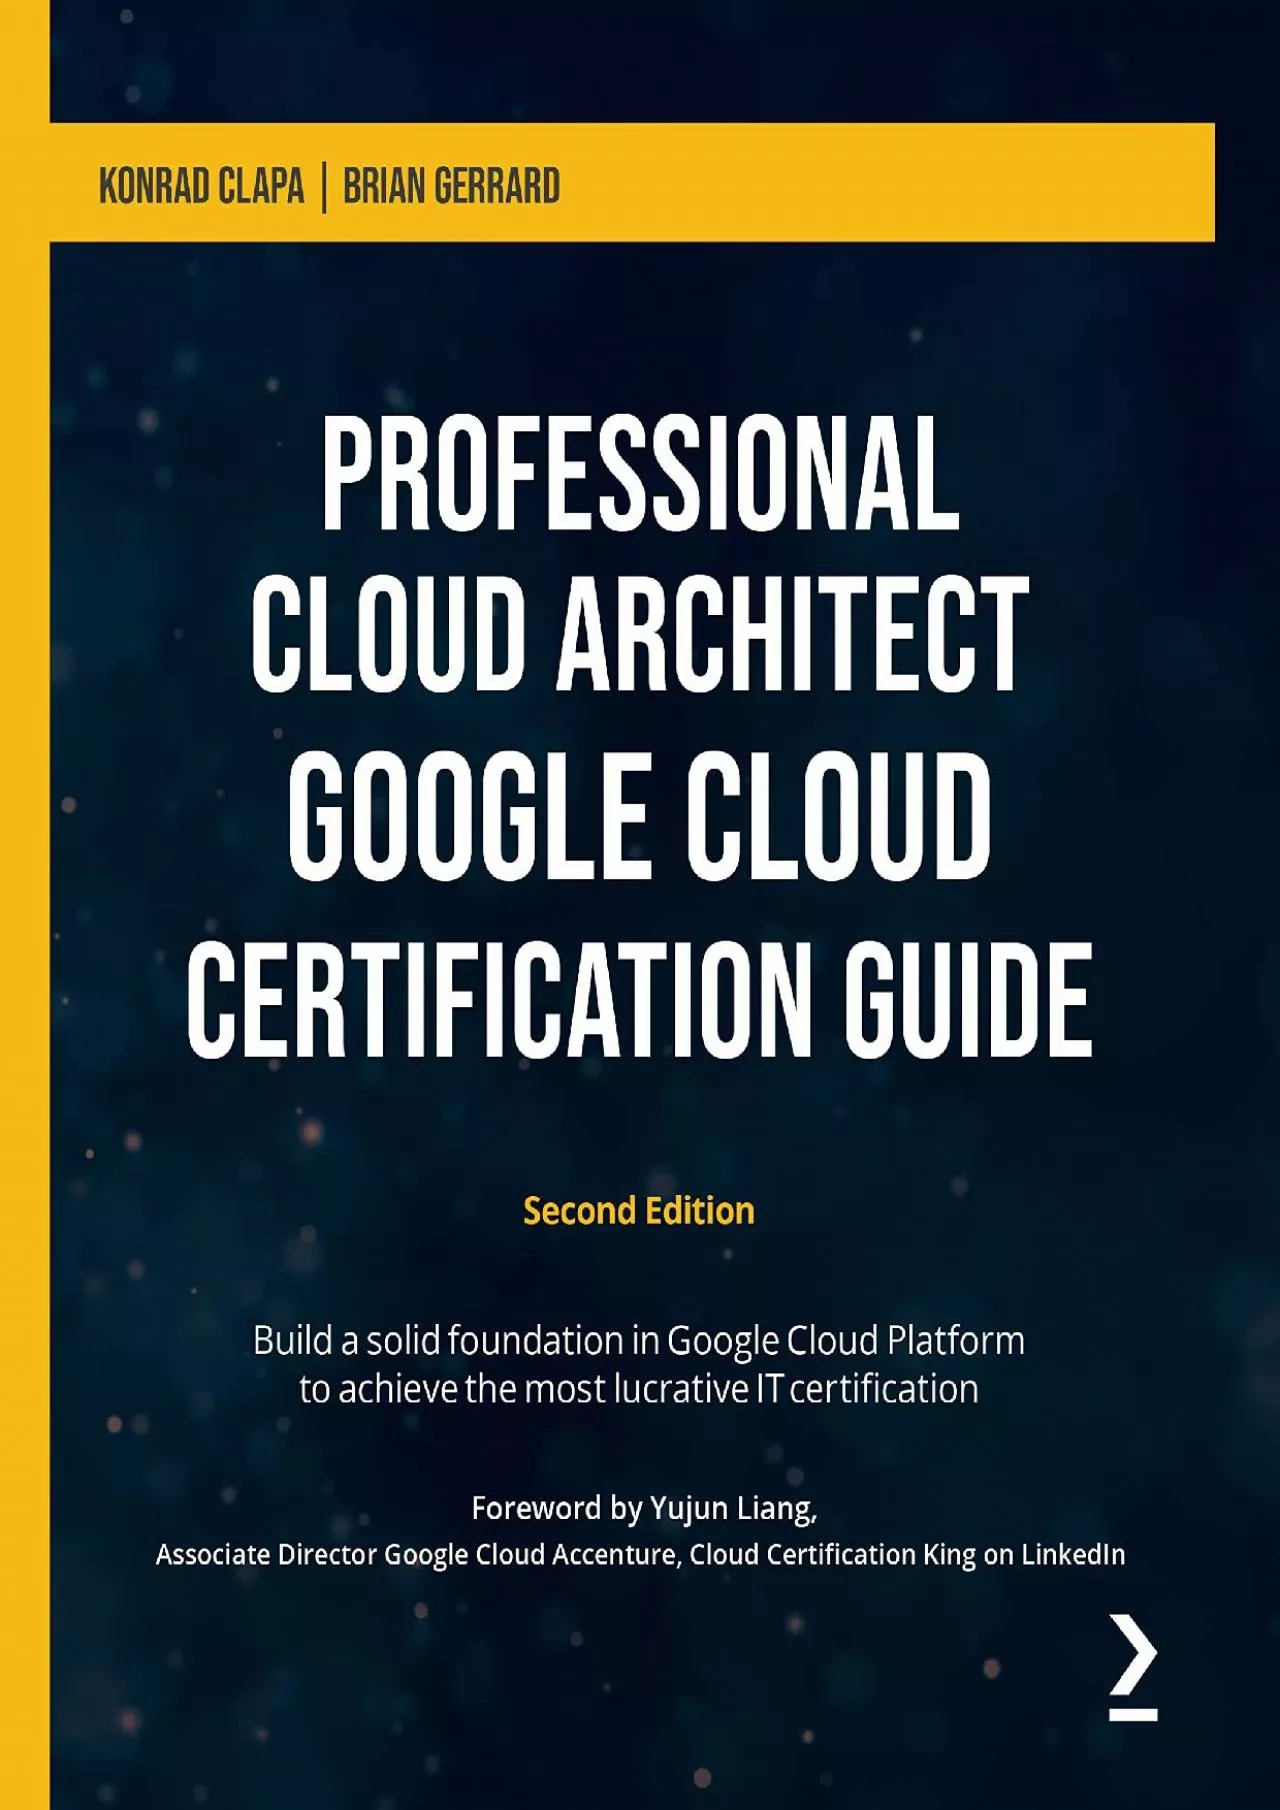 [READ]-Professional Cloud Architect Google Cloud Certification Guide: Build a solid foundation